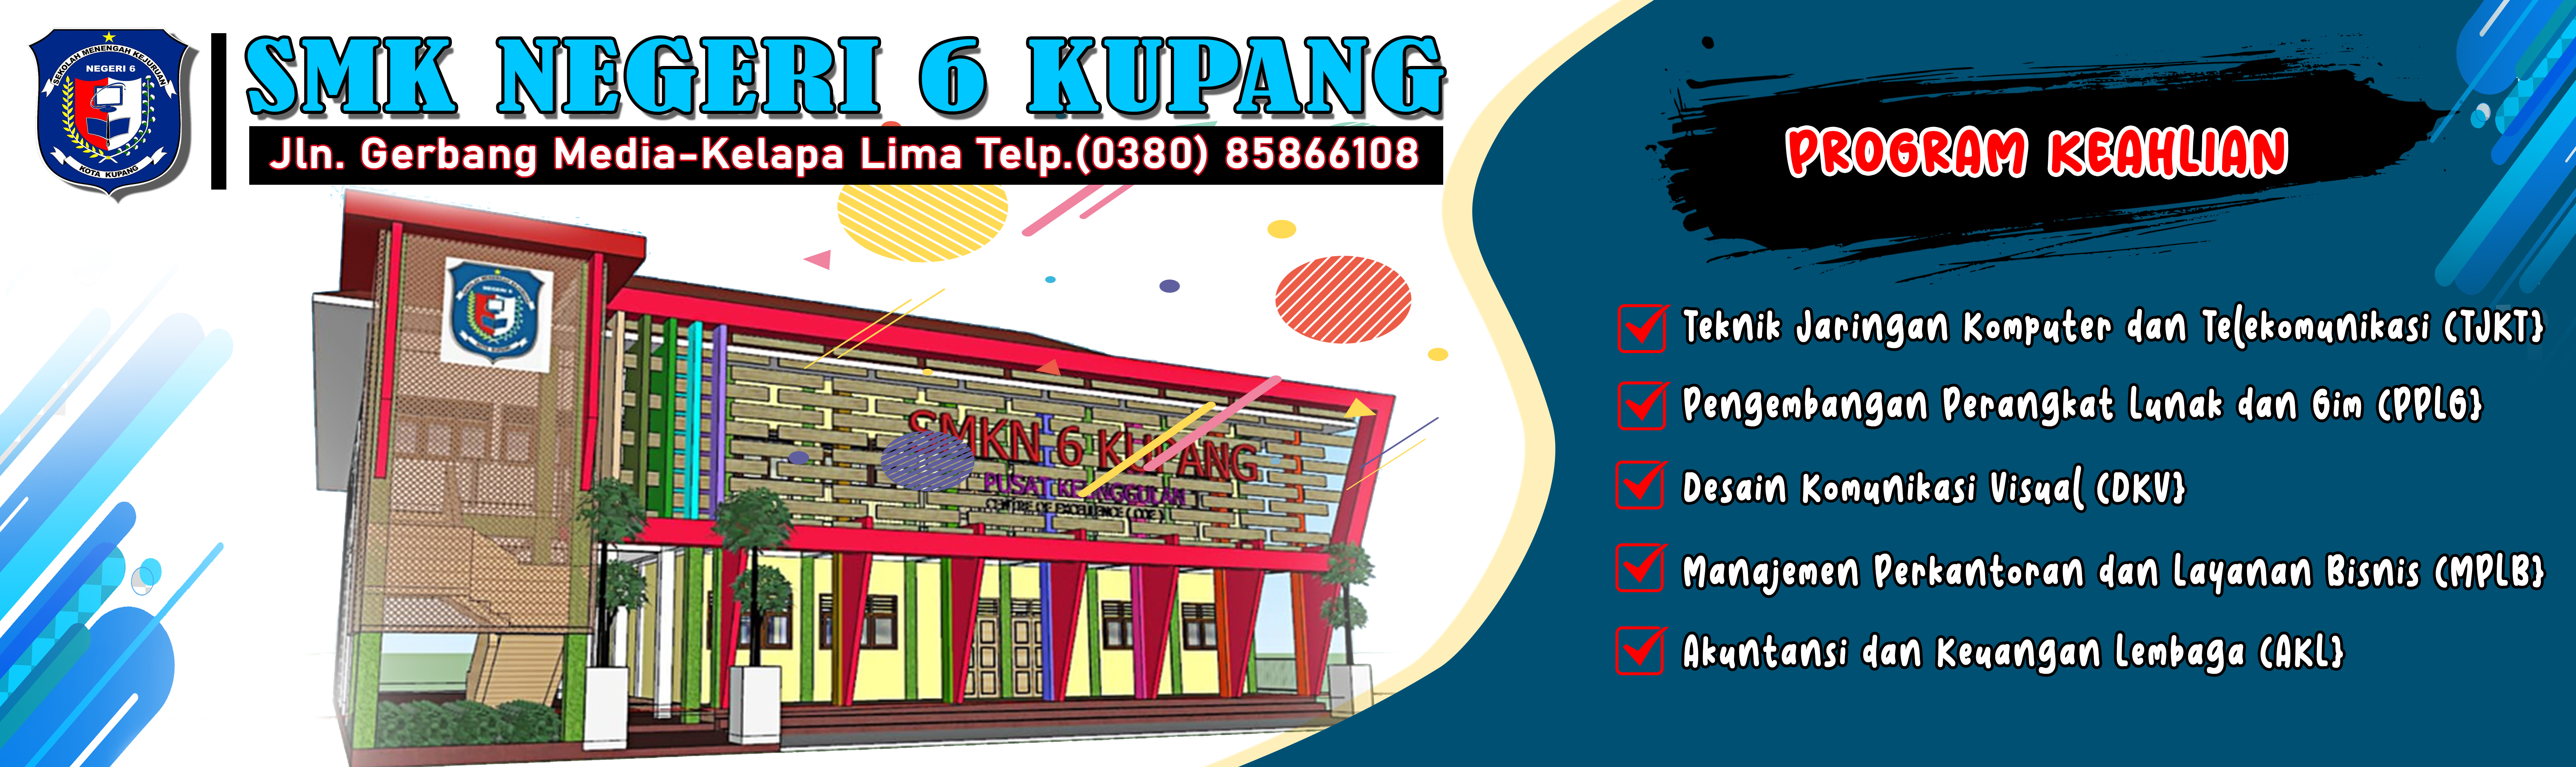 SMK Negeri 6 Kupang